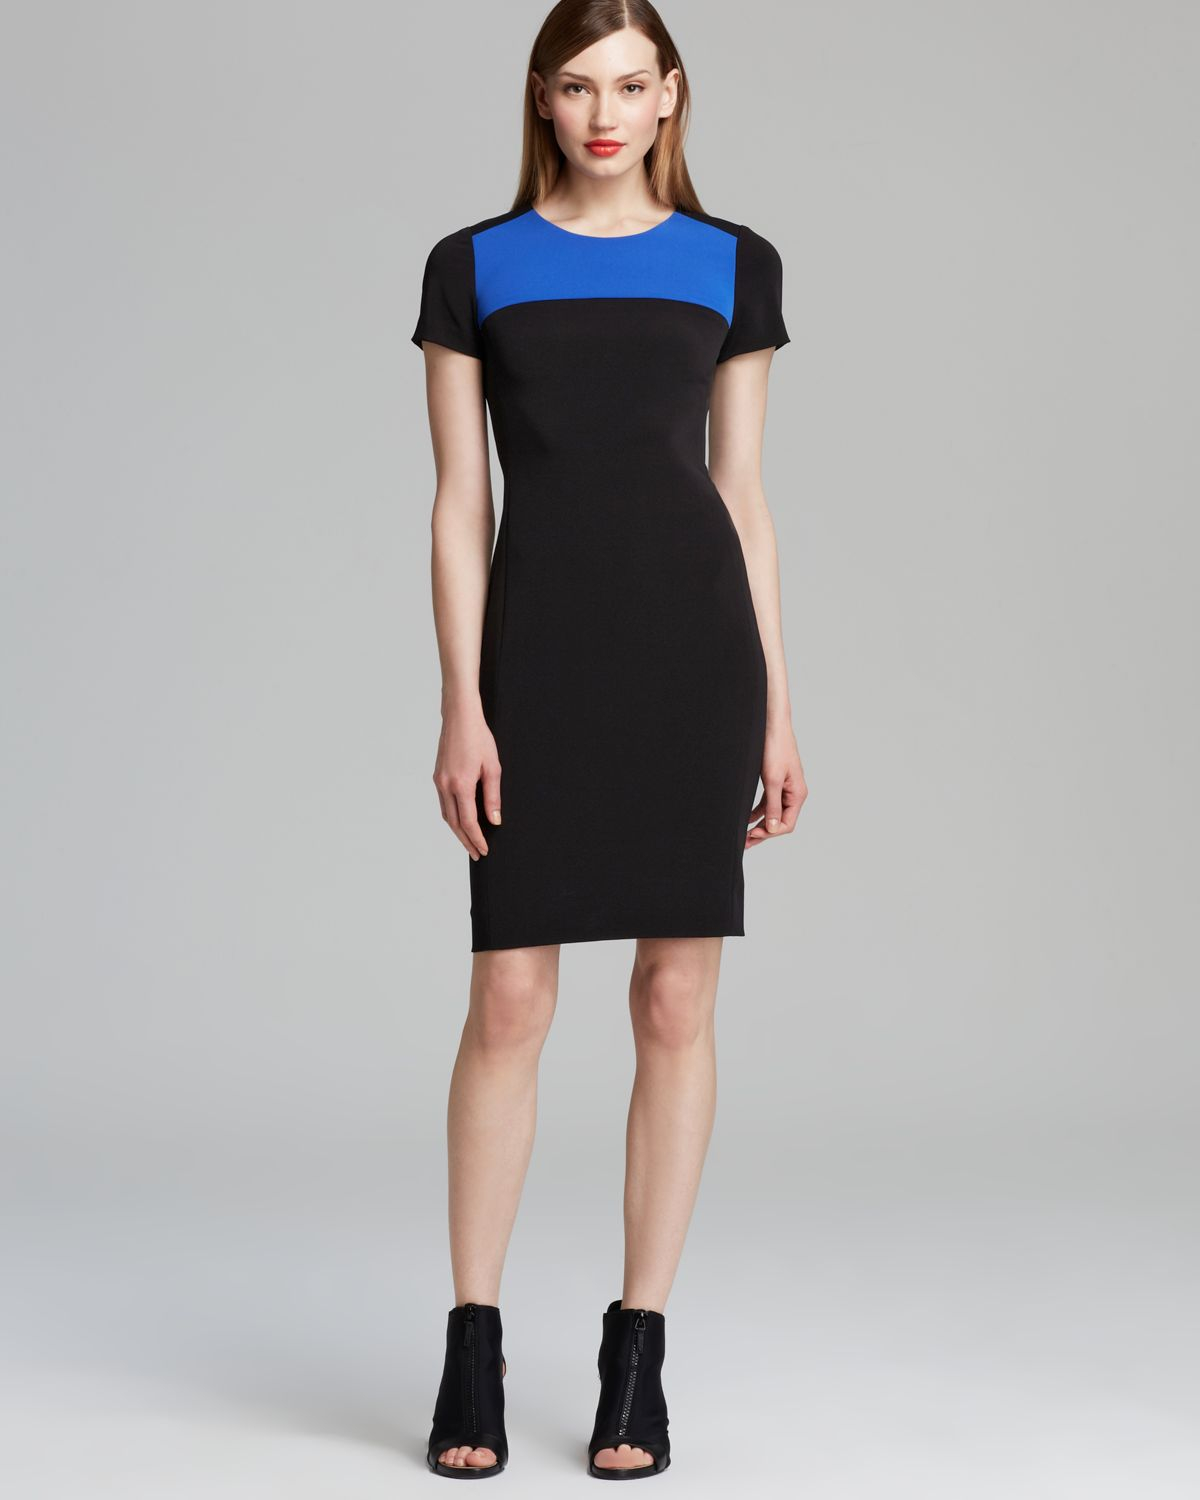 Dkny Color Block Short Sleeve Dress in Black | Lyst